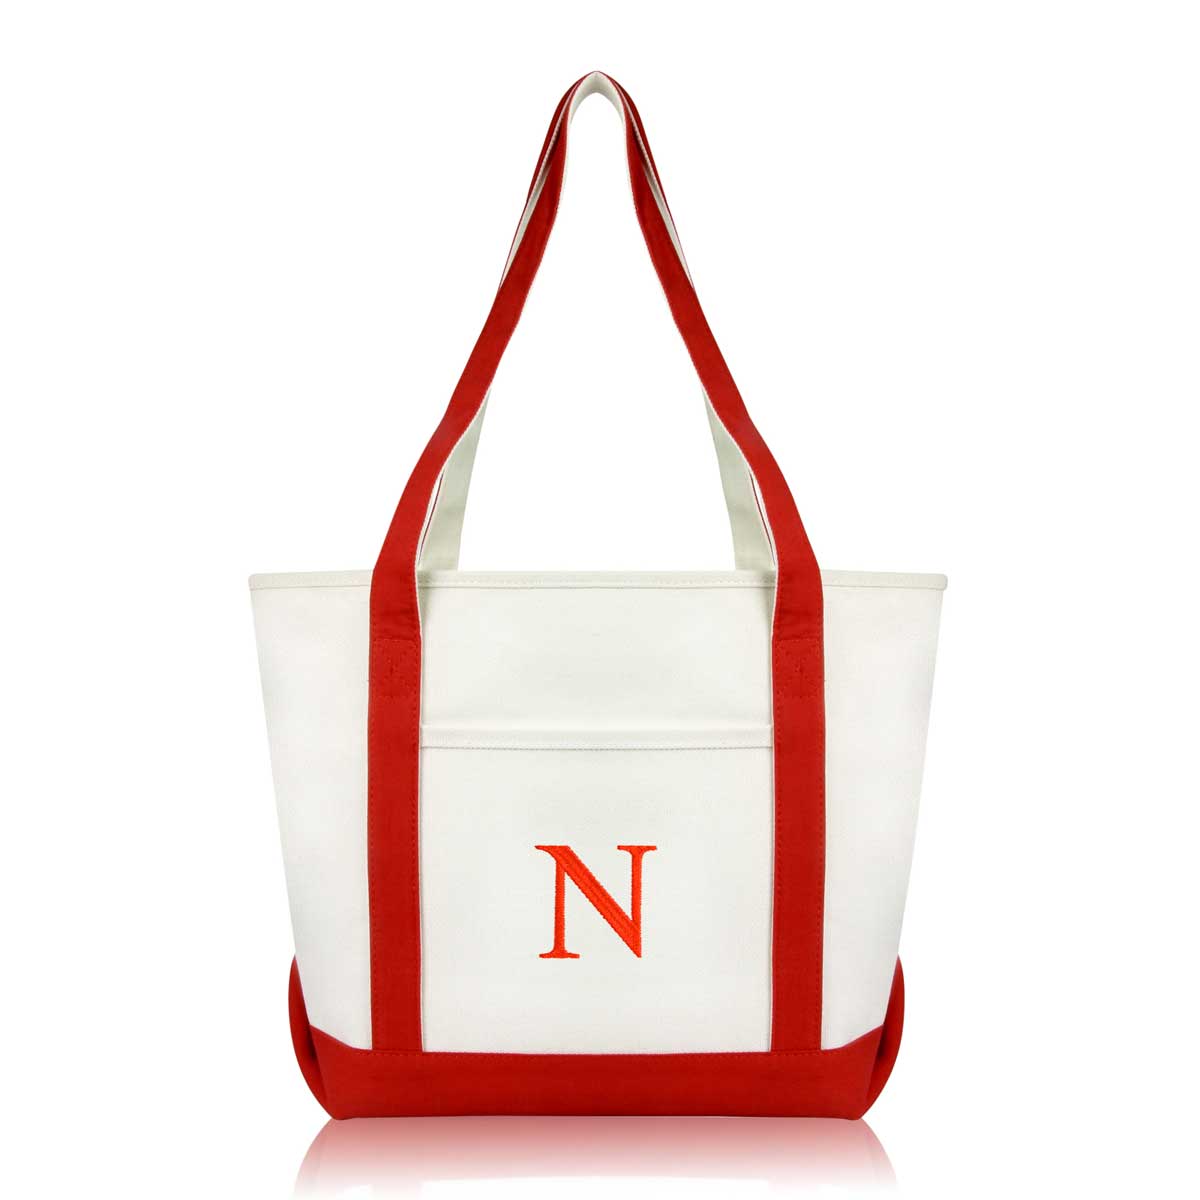 Dalix Medium Personalized Tote Bag Monogrammed Initial Letter - N